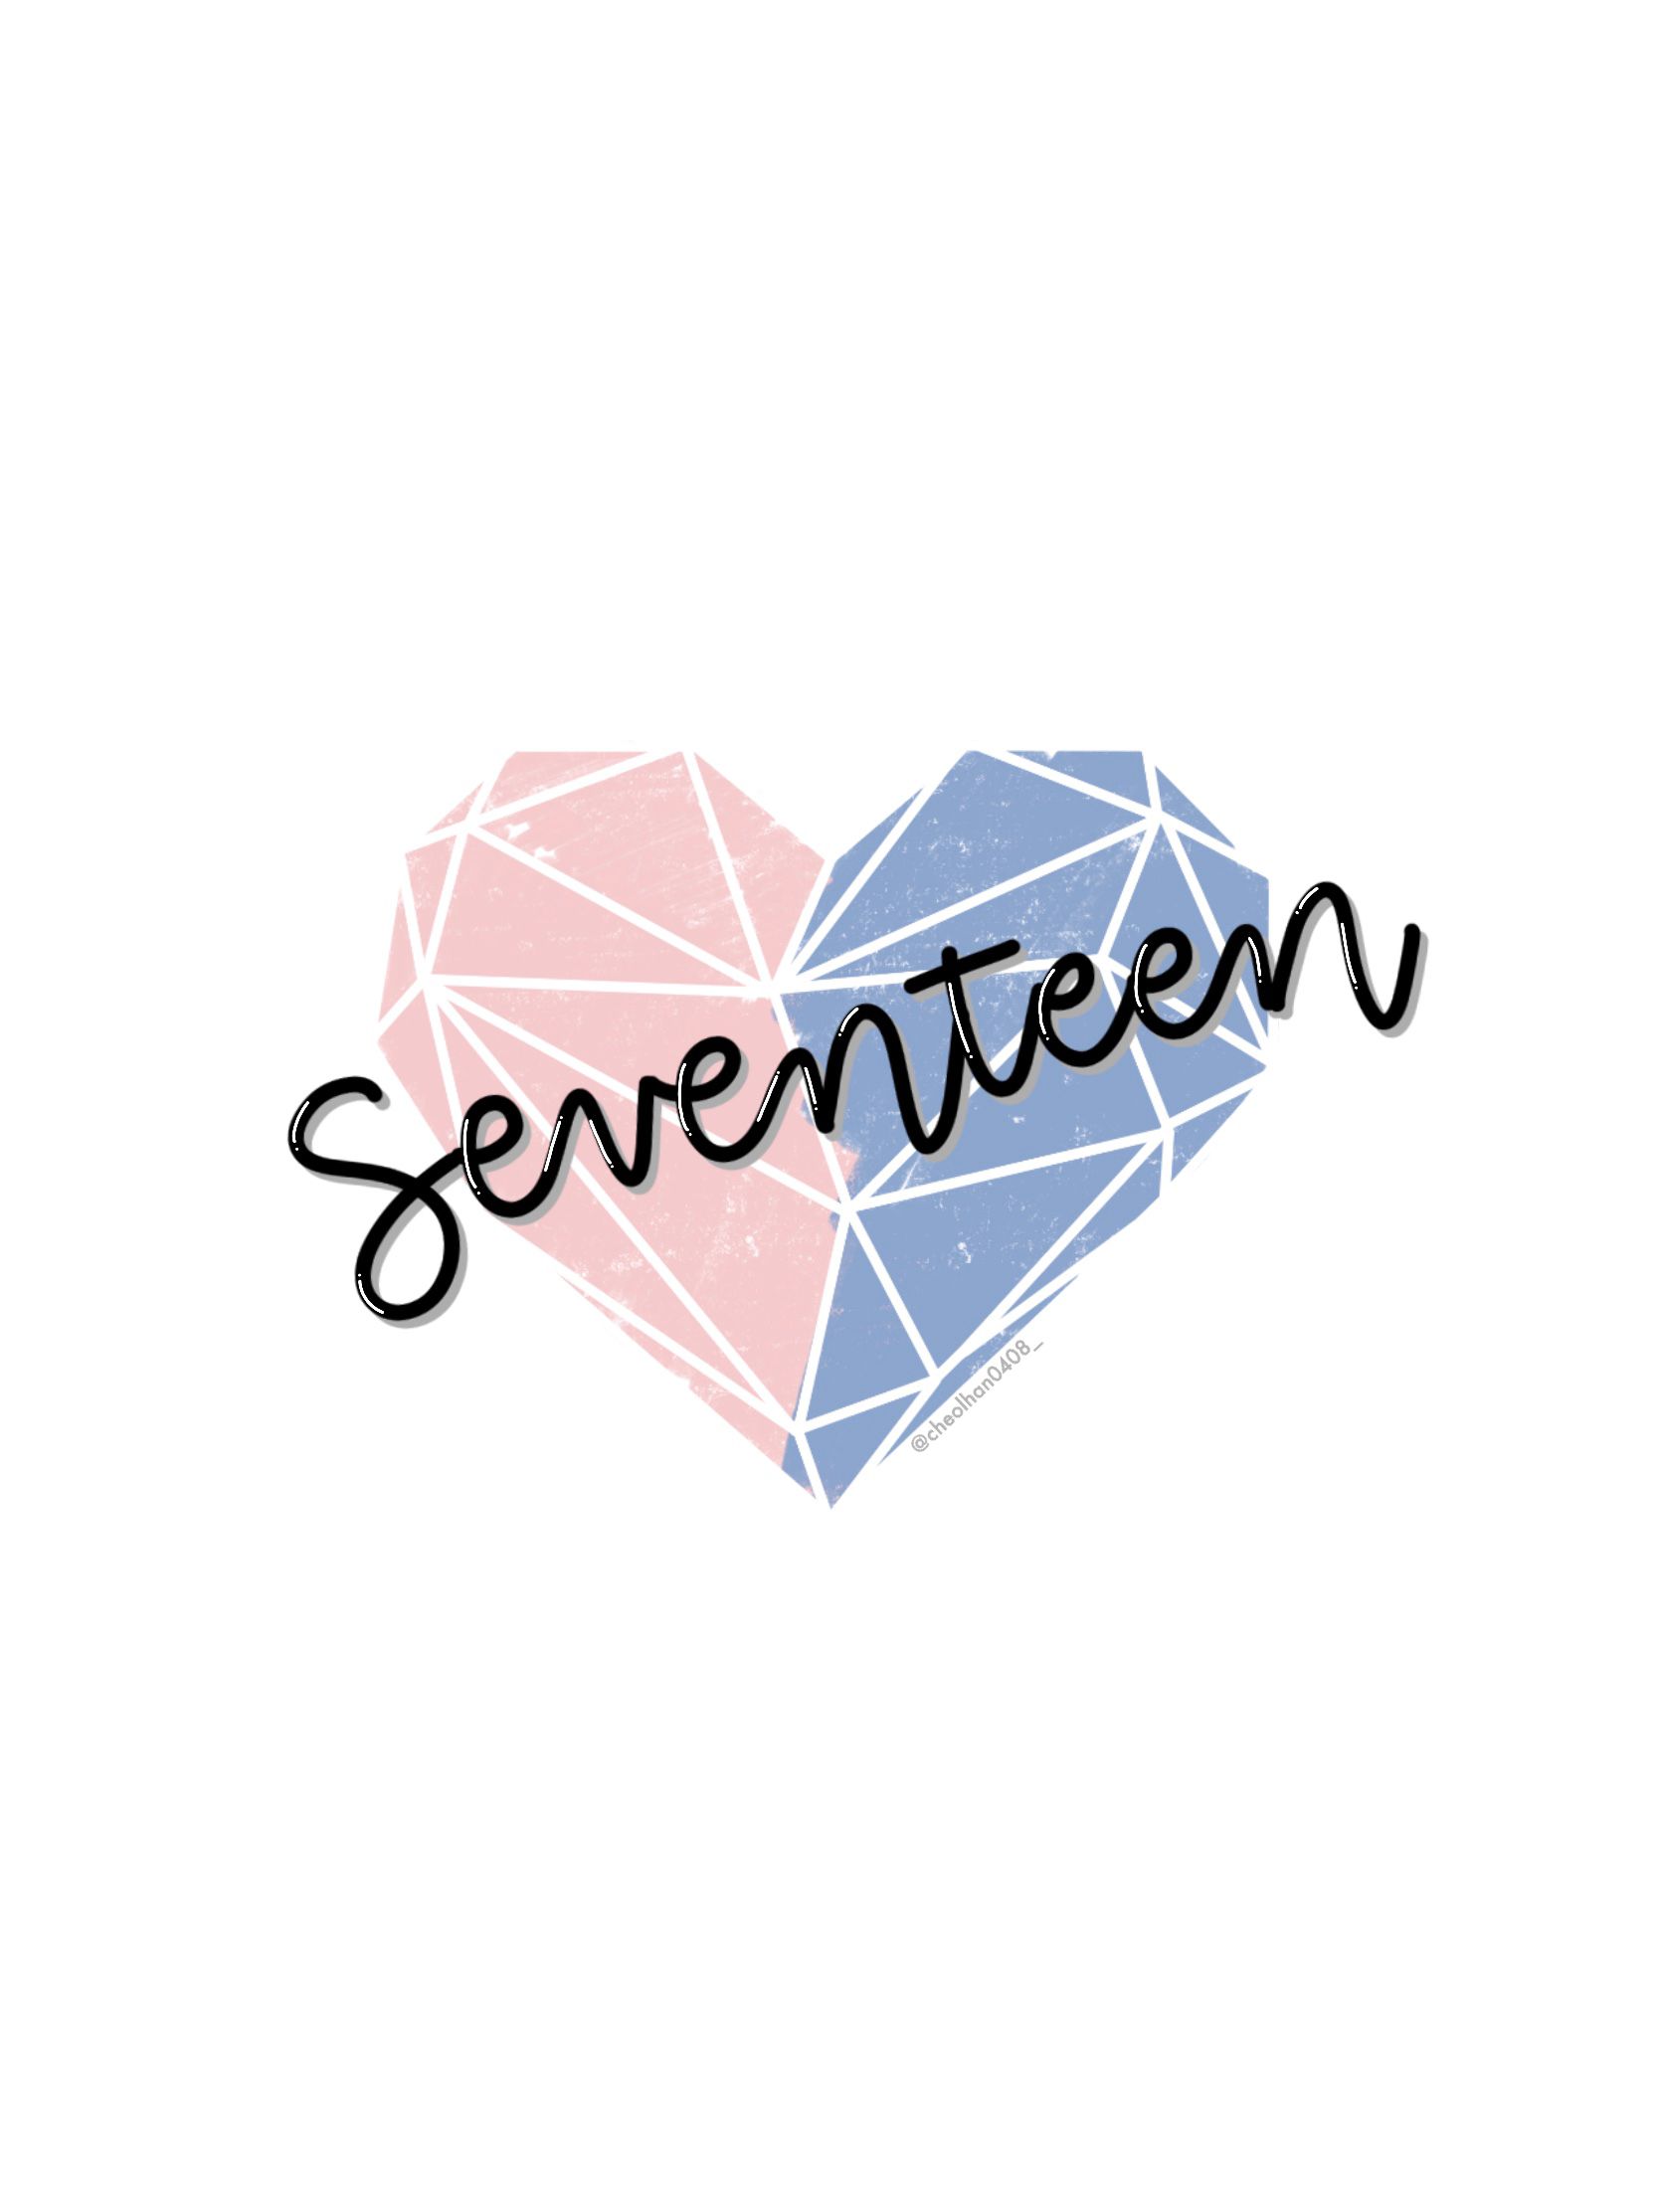 Seventeen. Rose quartz serenity, Seventeen, Korea wallpaper